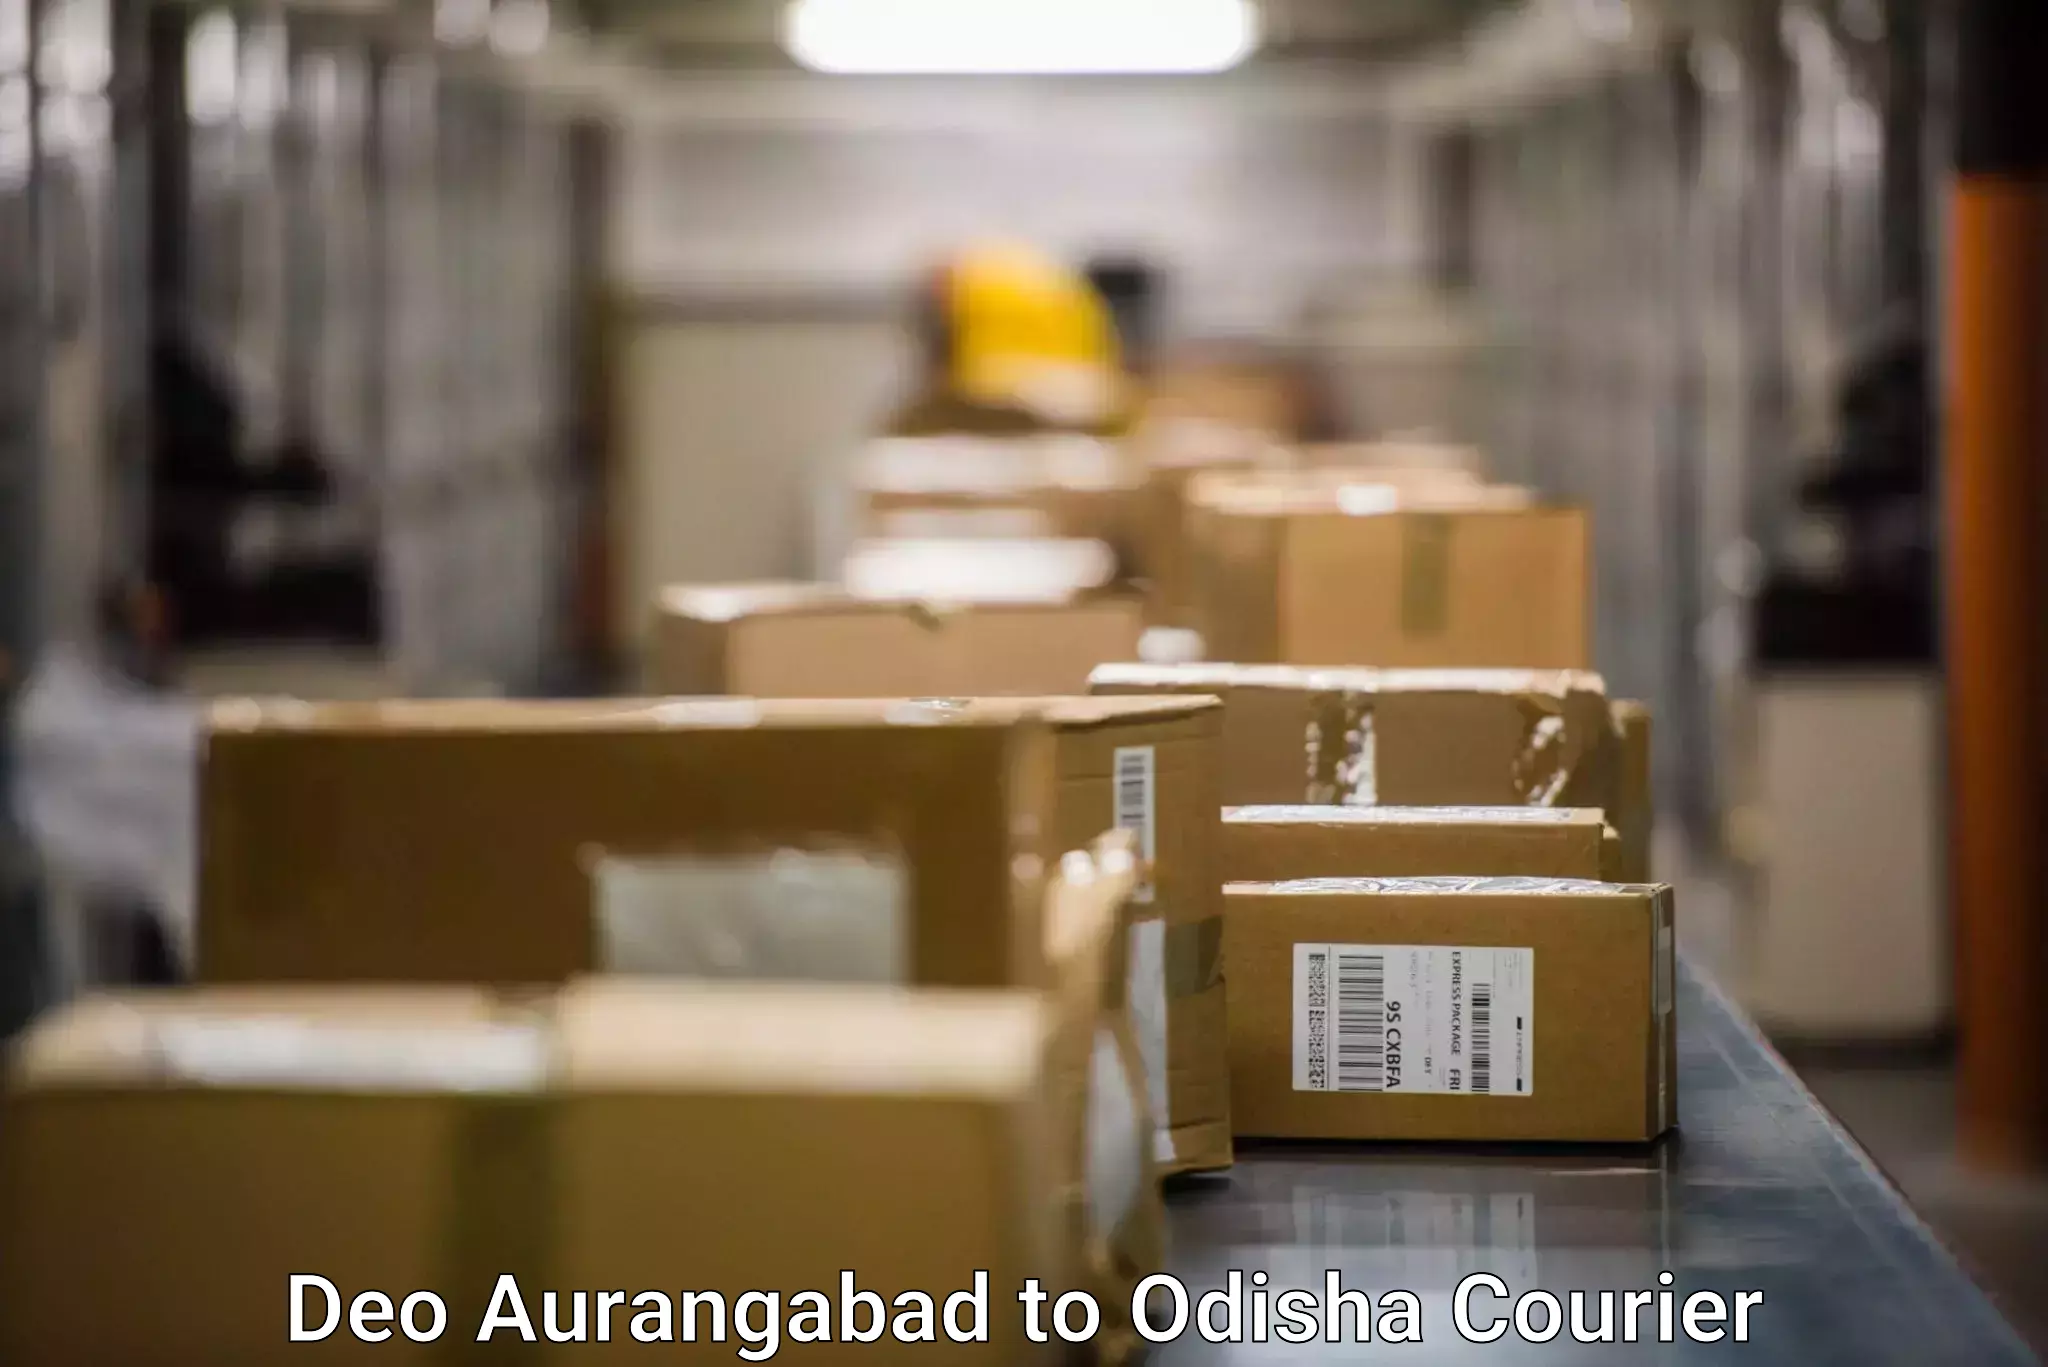 Customer-focused courier Deo Aurangabad to Odisha